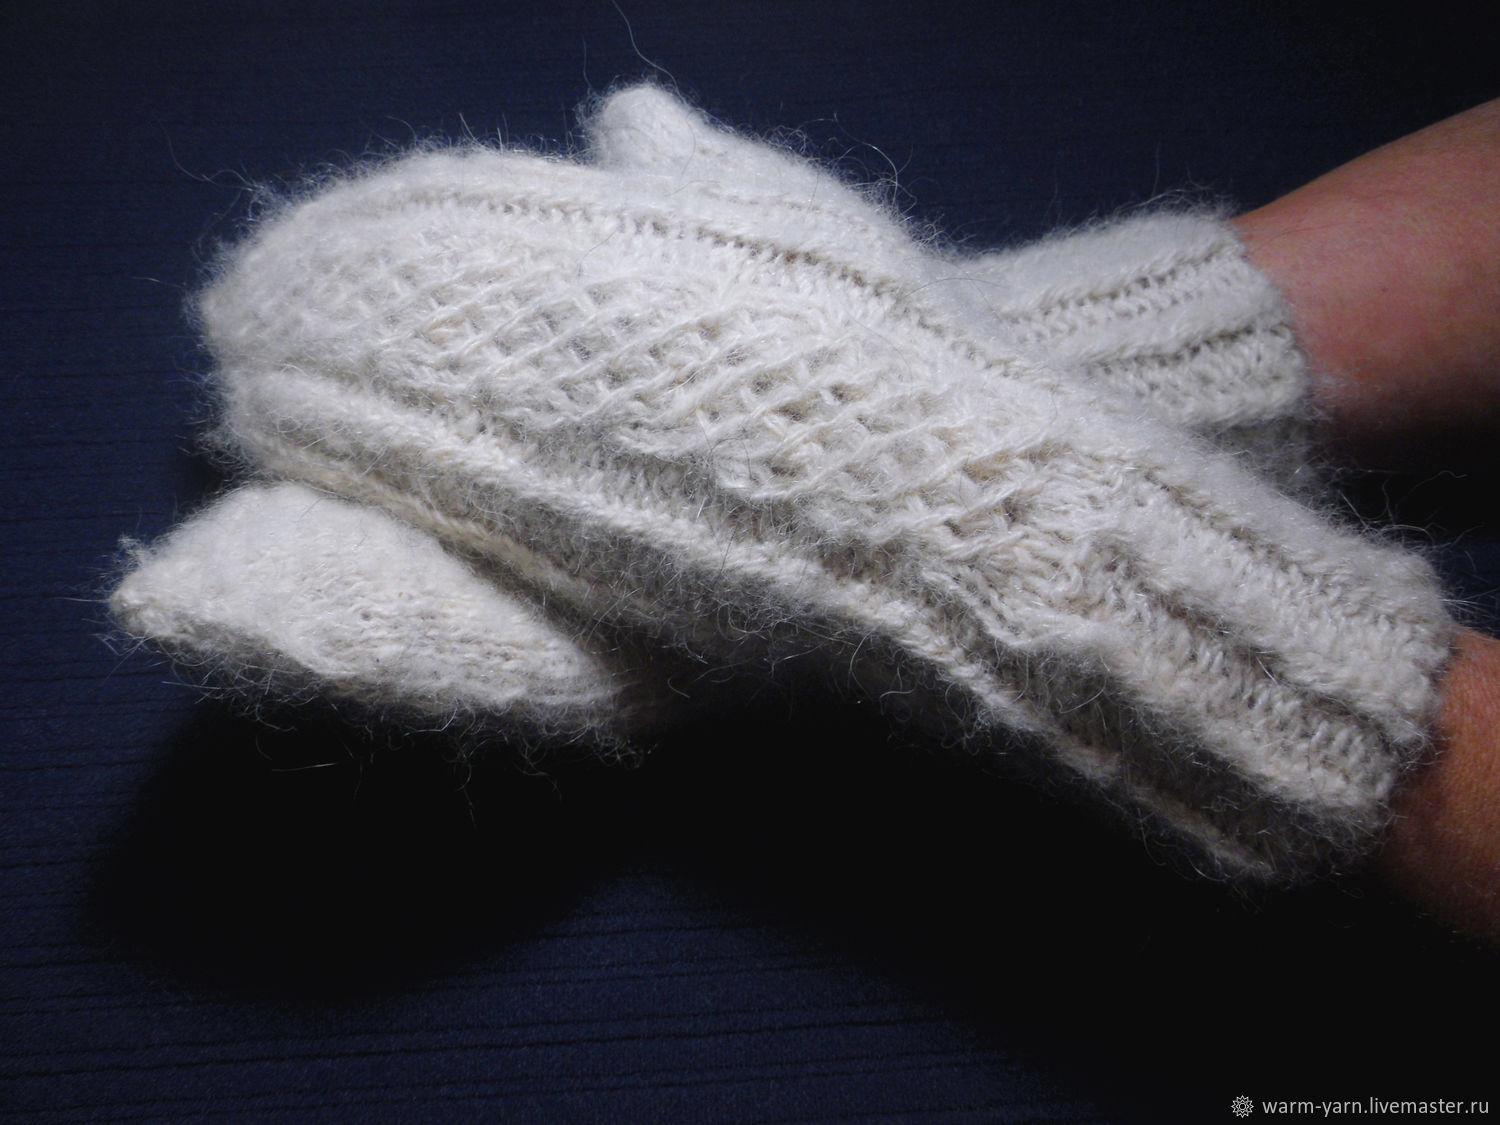 knitting online shop